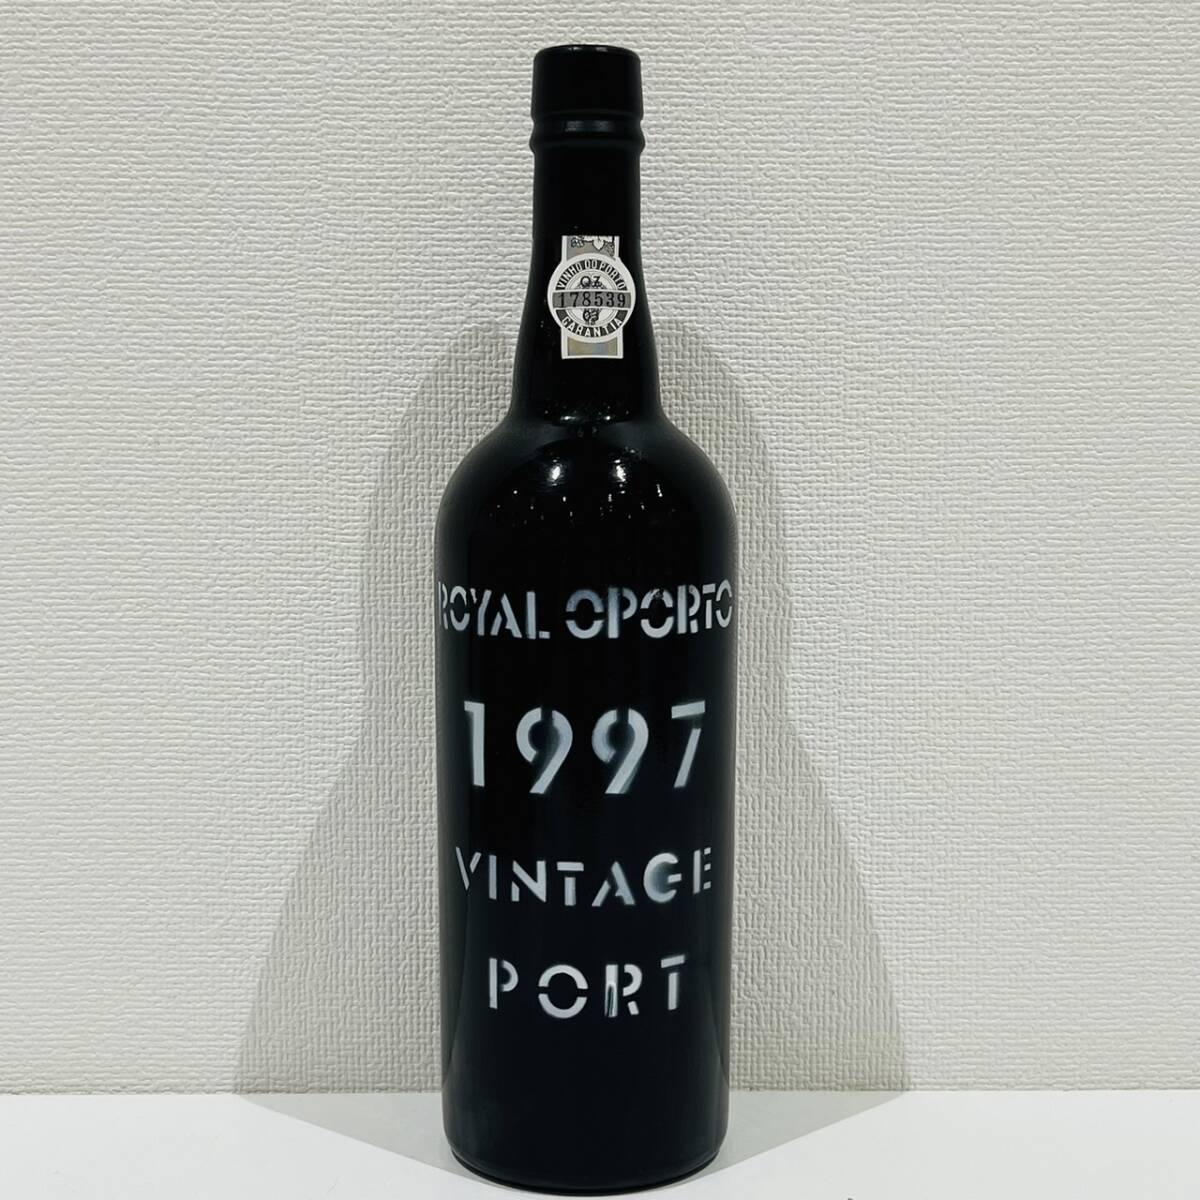 【AMT-10442】ROYAL OPORTO 1997 VINTAGE PORT 木箱入り ロイヤル オポルト ポートワイン 750ml 20% 未開栓 お酒 コレクション オールドの画像2